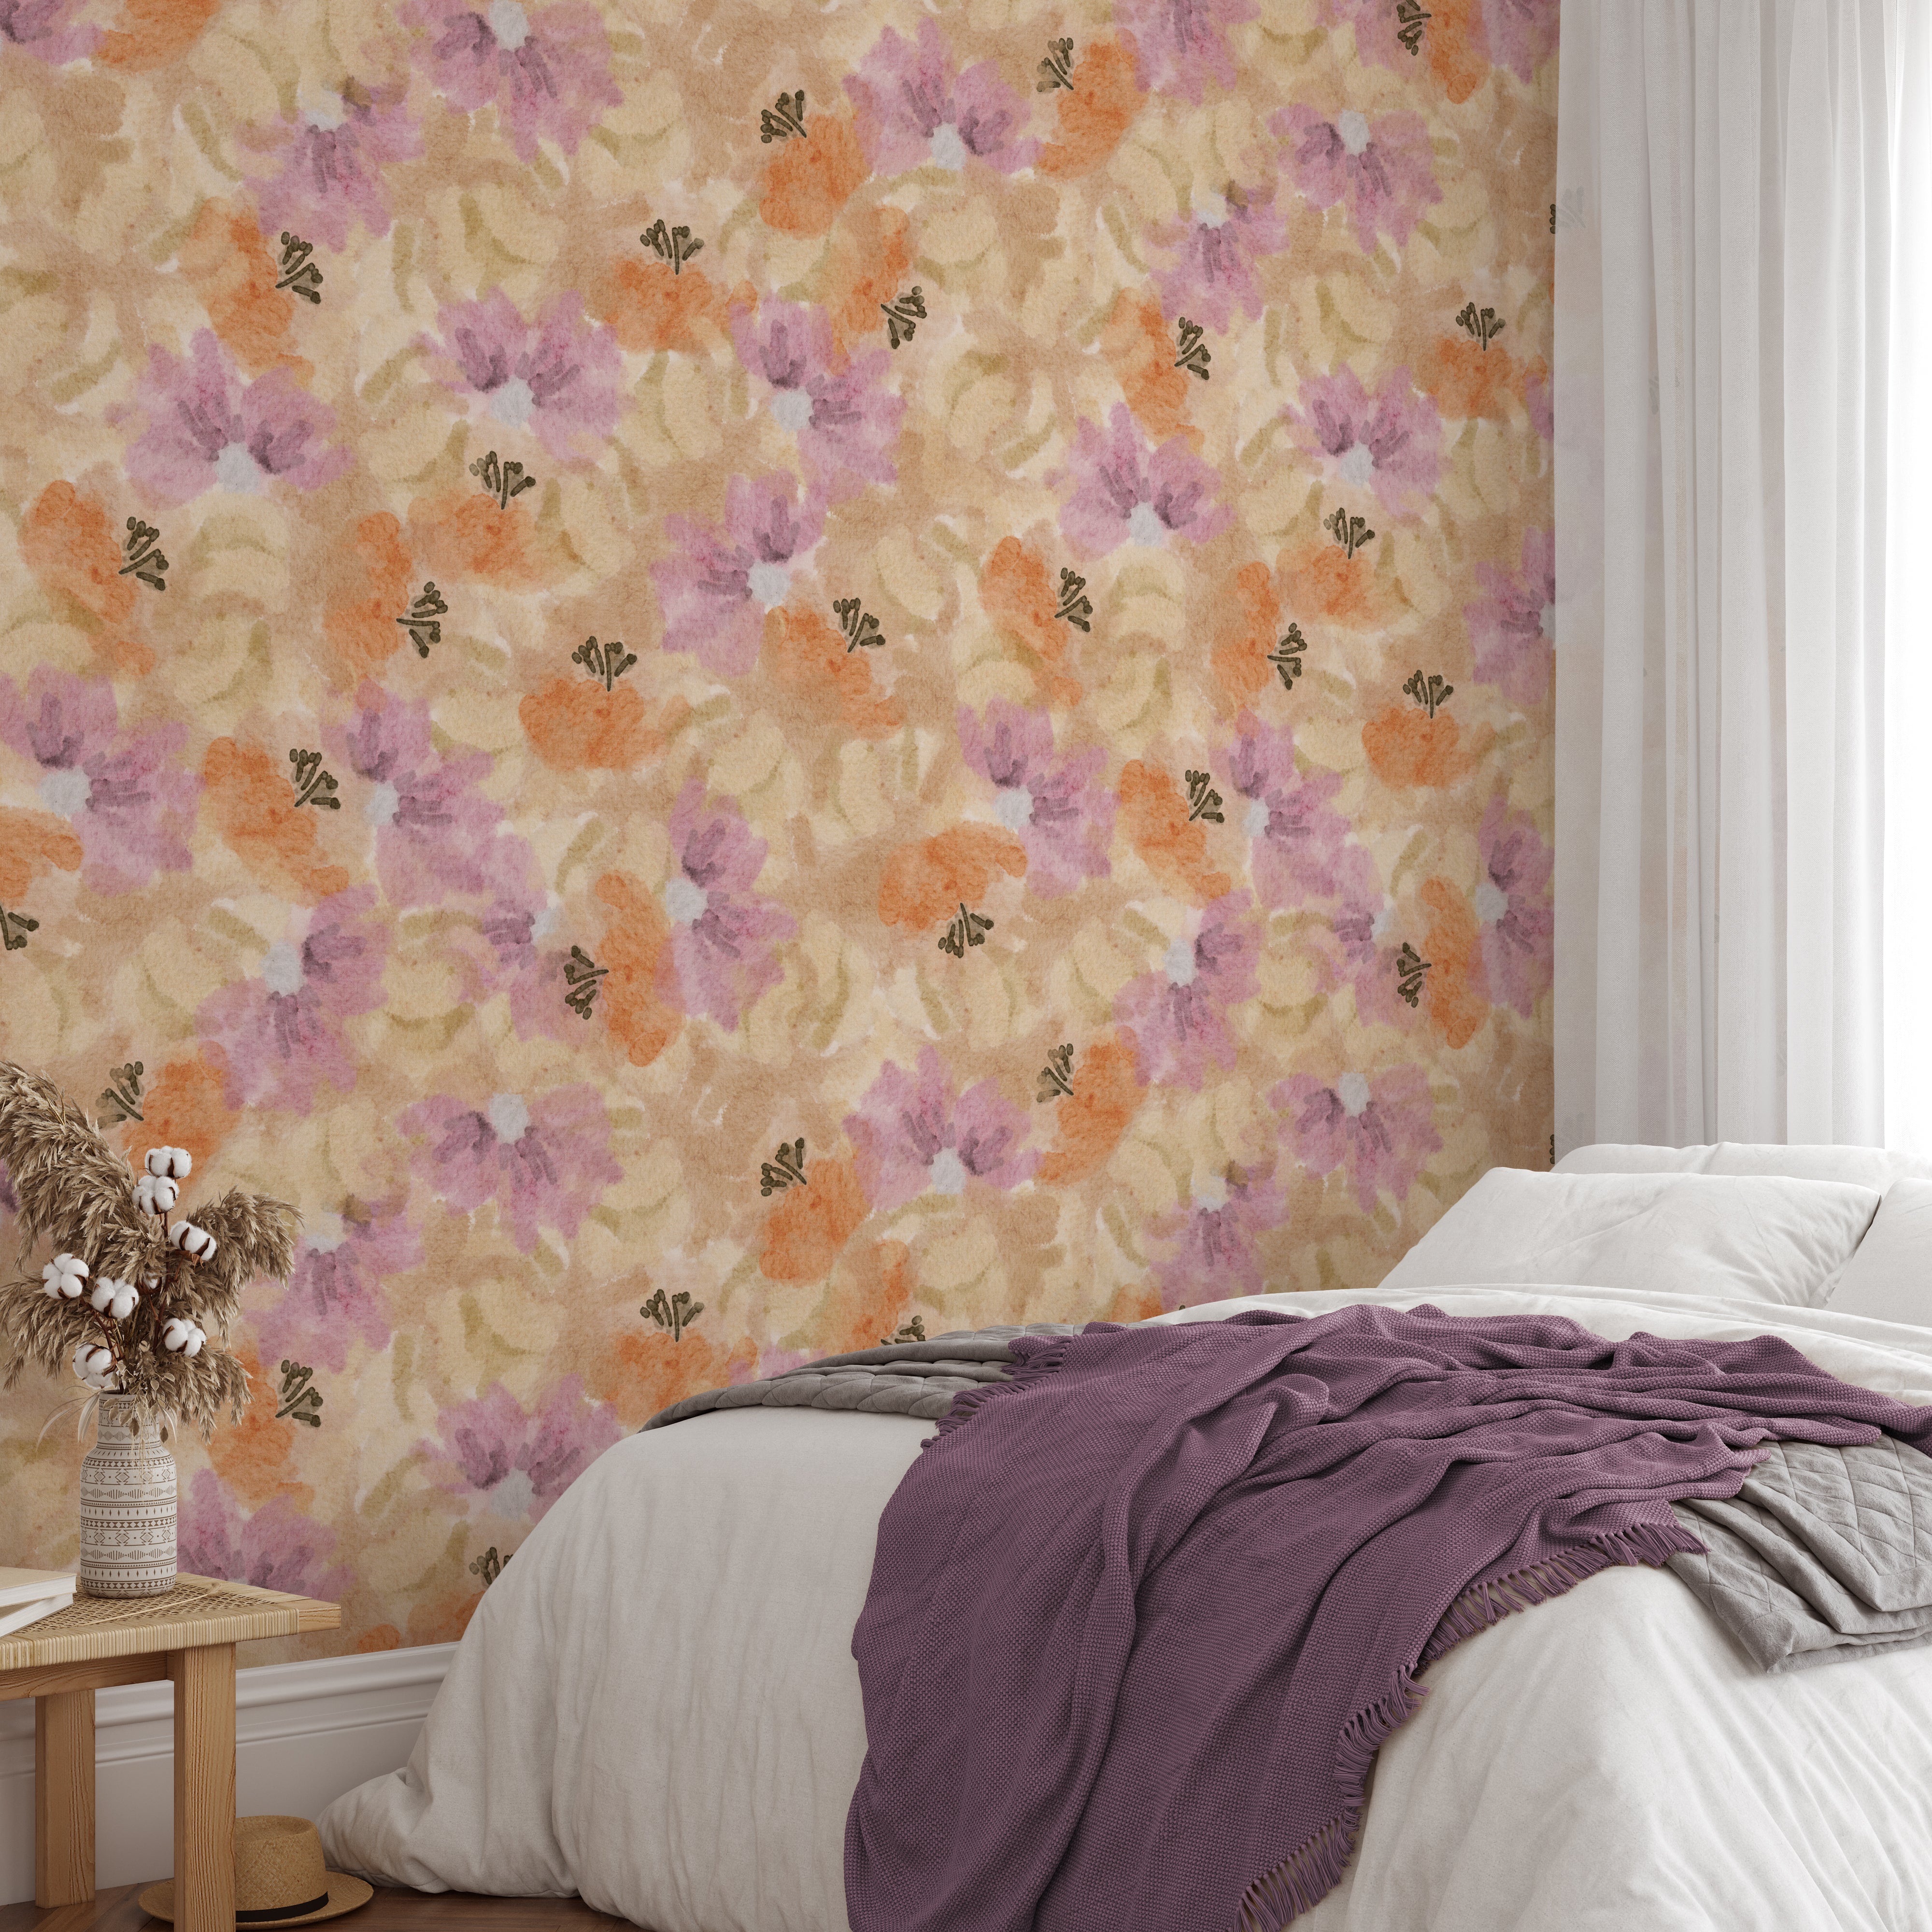 Twill Flowers Wallpaper - Wall Blush SG02 from WALL BLUSH